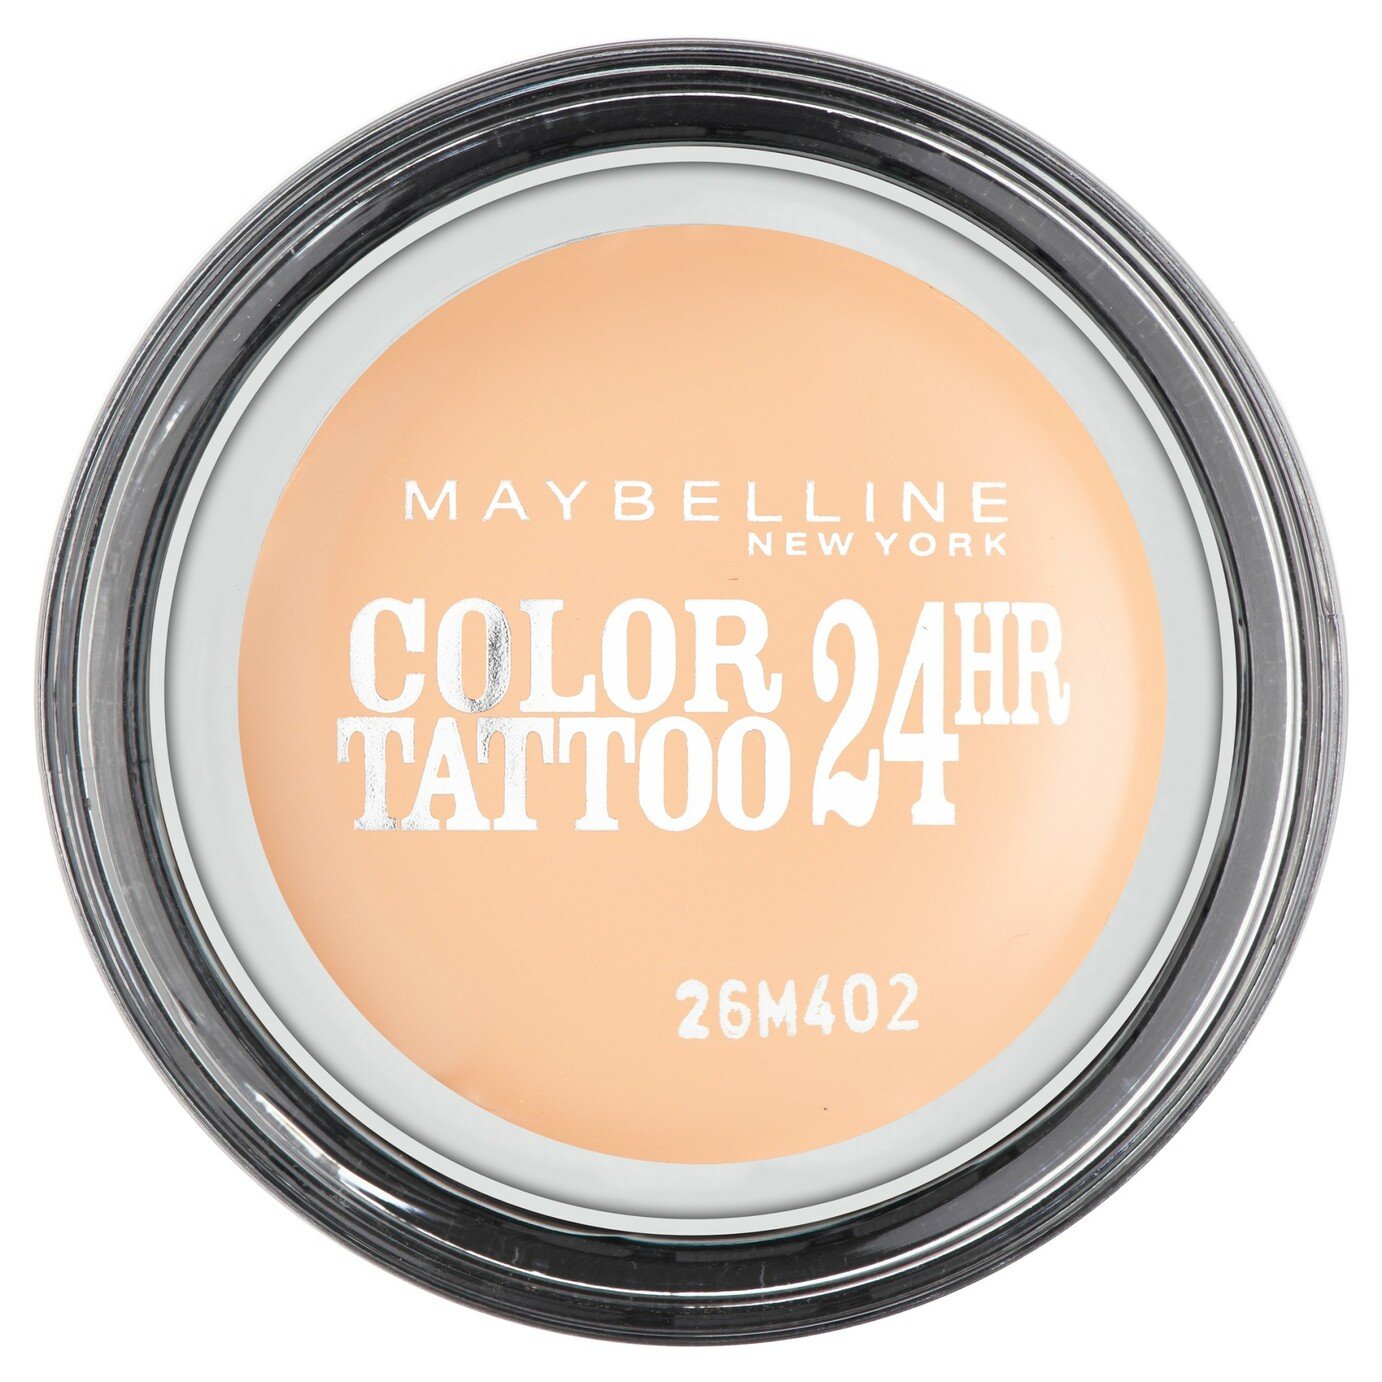 Maybelline Color Tattoo 24hr Eyeshadow - Creme De Nude 93